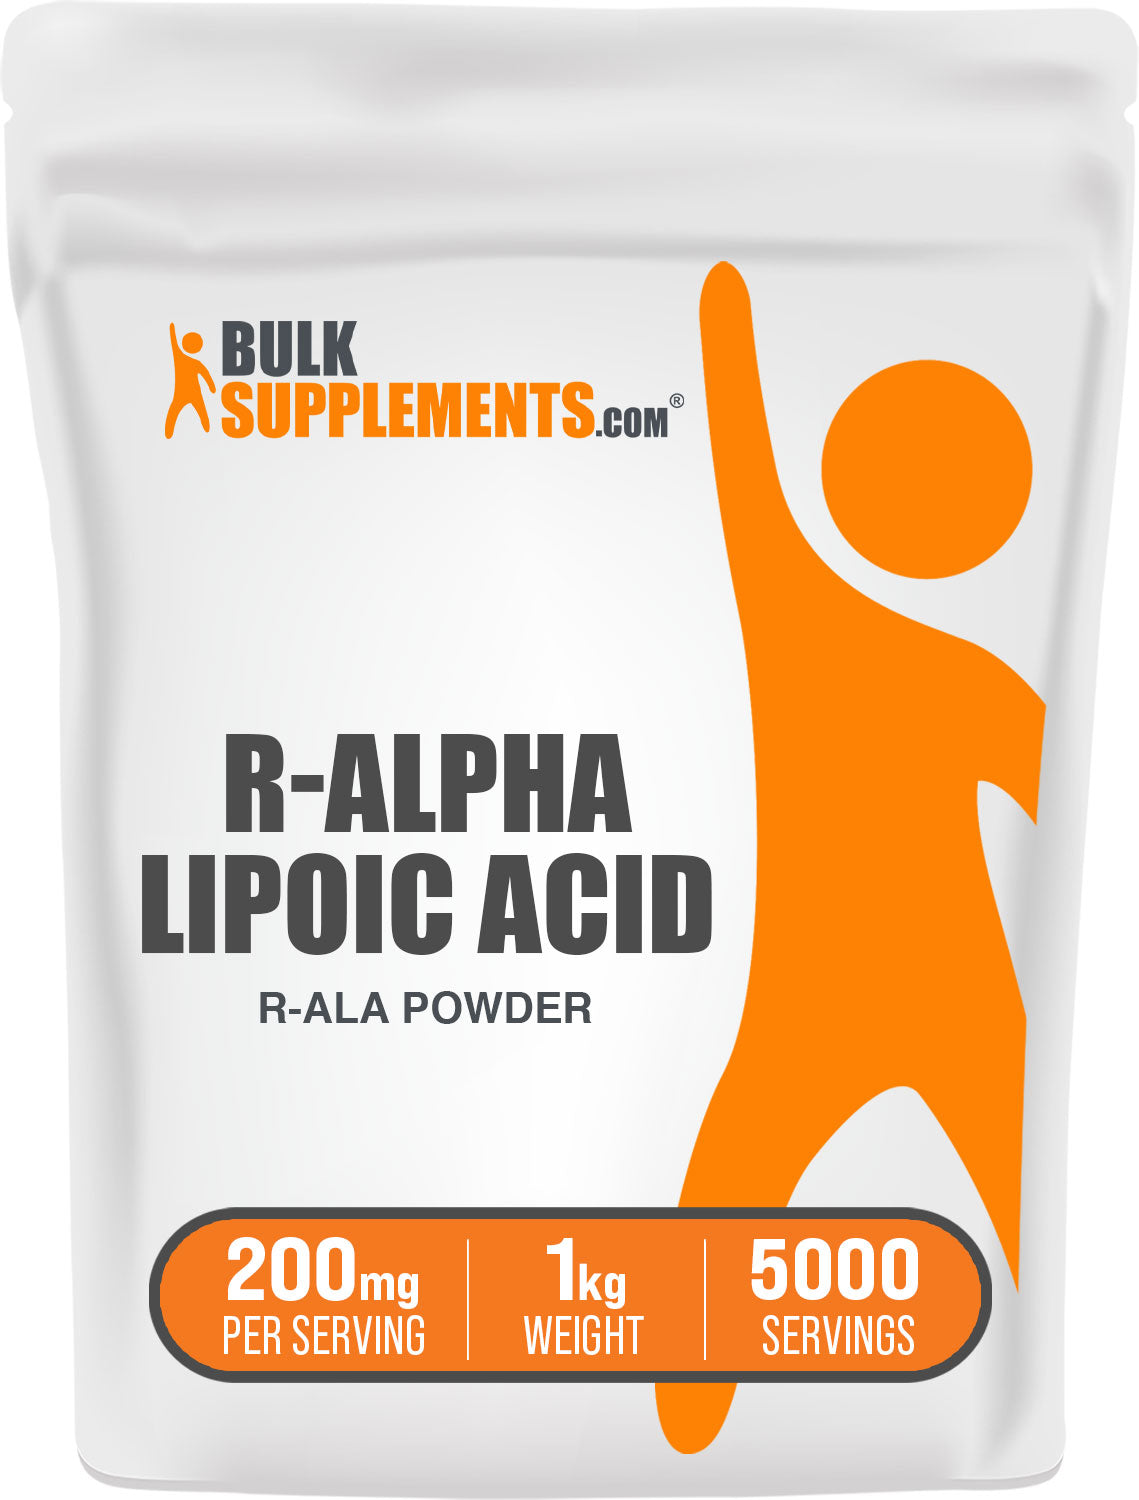 BulkSupplements R-Alpha Lipoic Acid Powder R-ALA 1kg bag